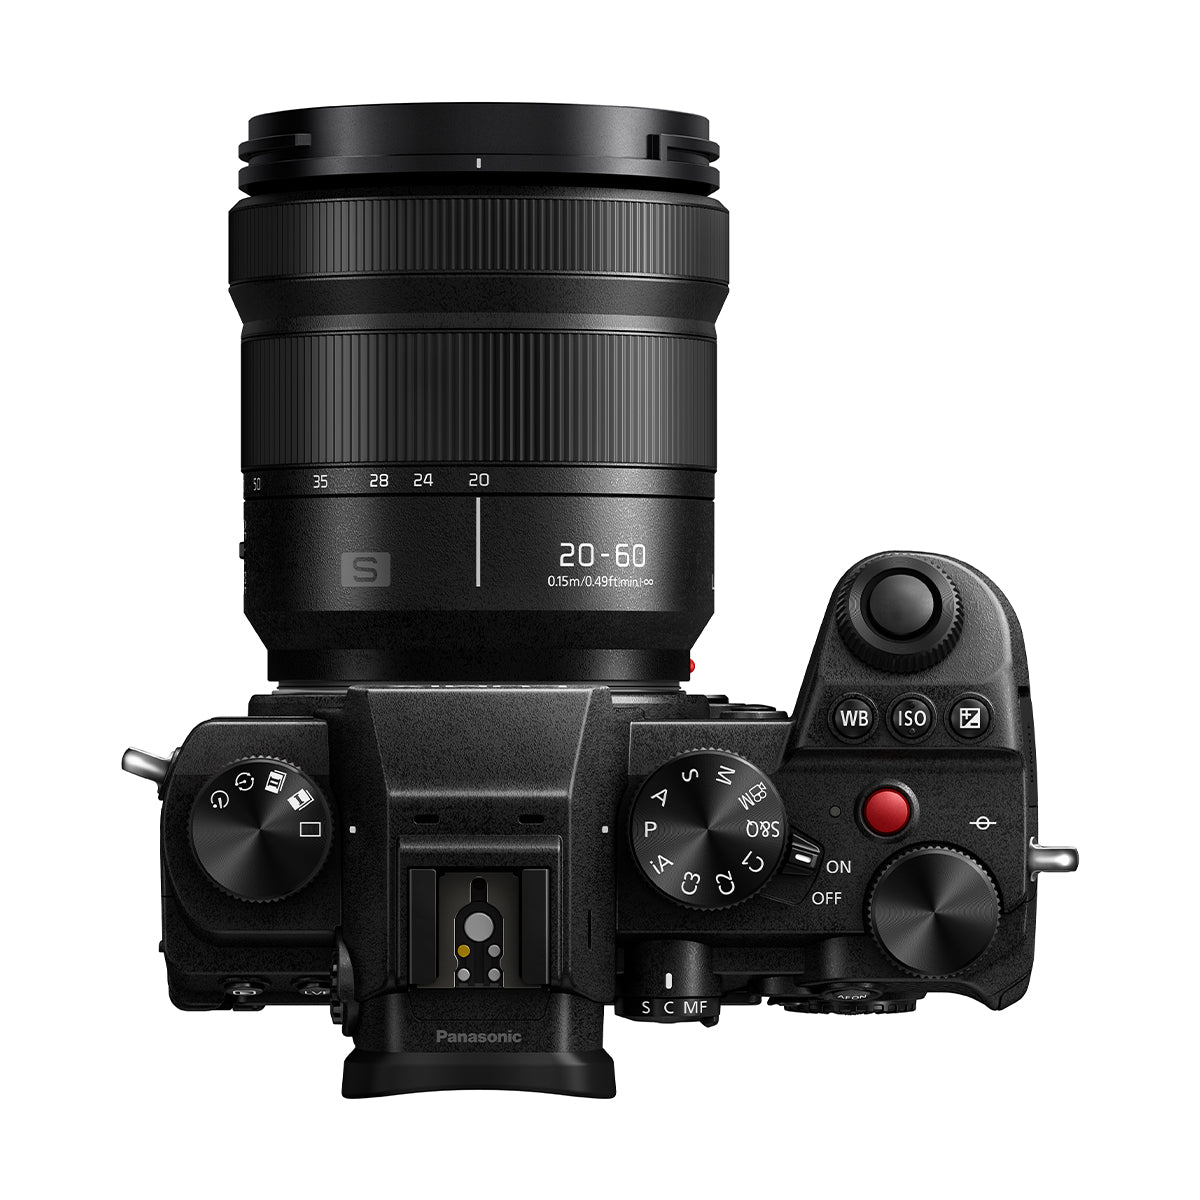 Panasonic Lumix S5 Full Frame Mirrorless Camera with Lumix S 20-60mm f/3.5-5.6 Lens *OPEN BOX*